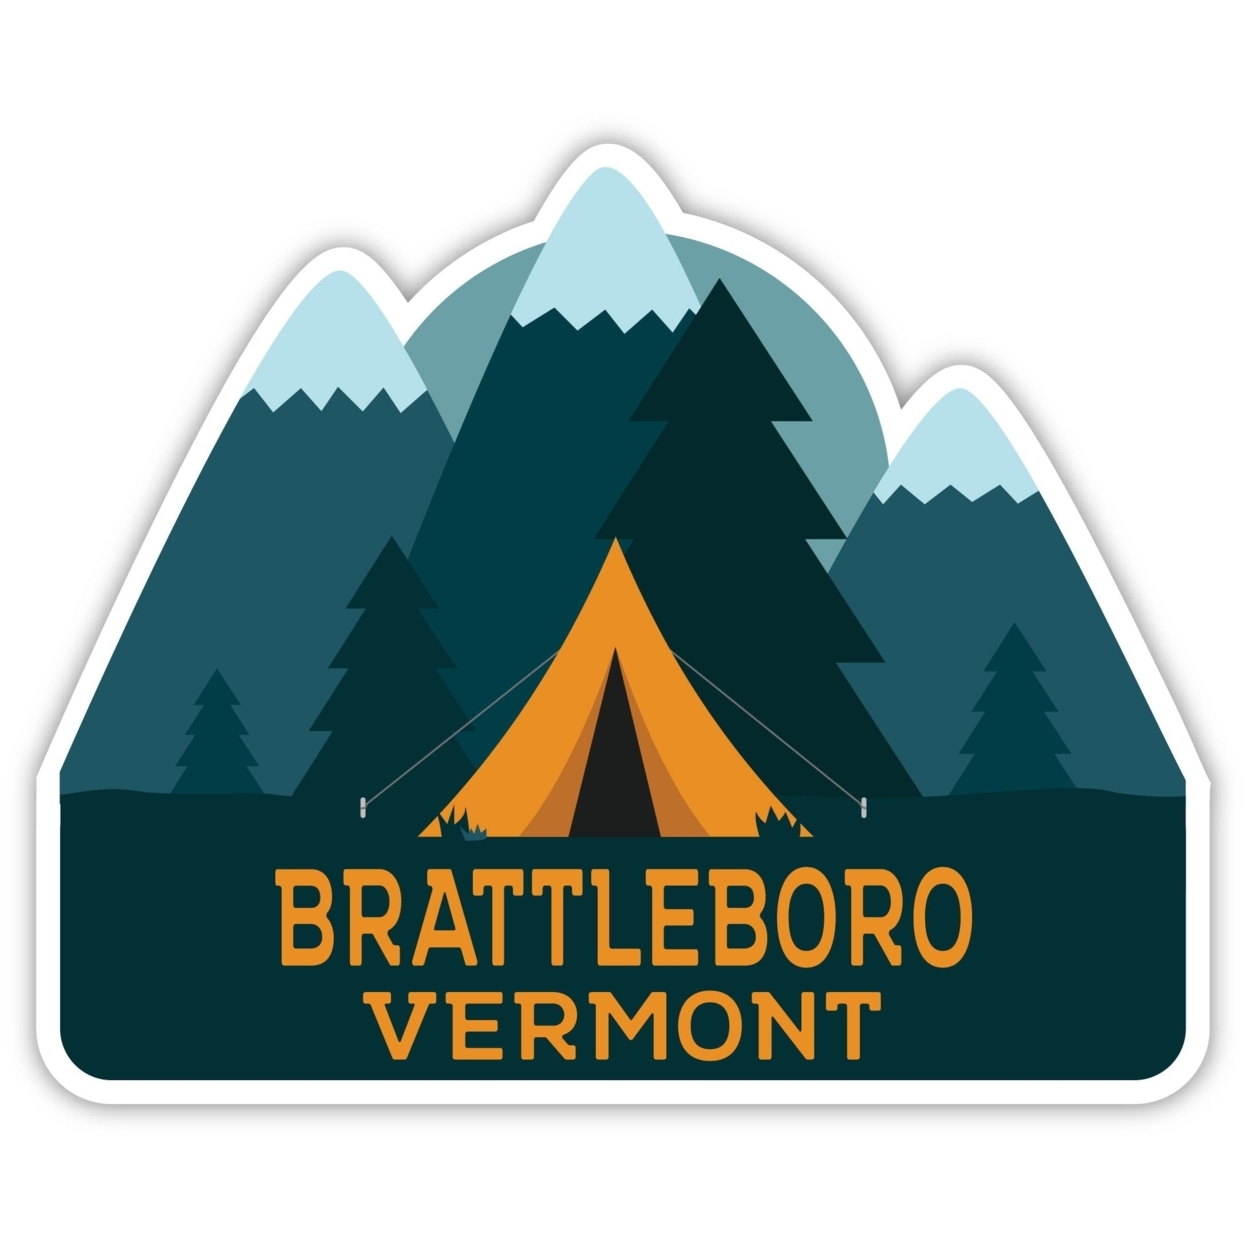 Brattleboro Vermont Souvenir Decorative Stickers (Choose Theme And Size) - 4-Pack, 4-Inch, Tent